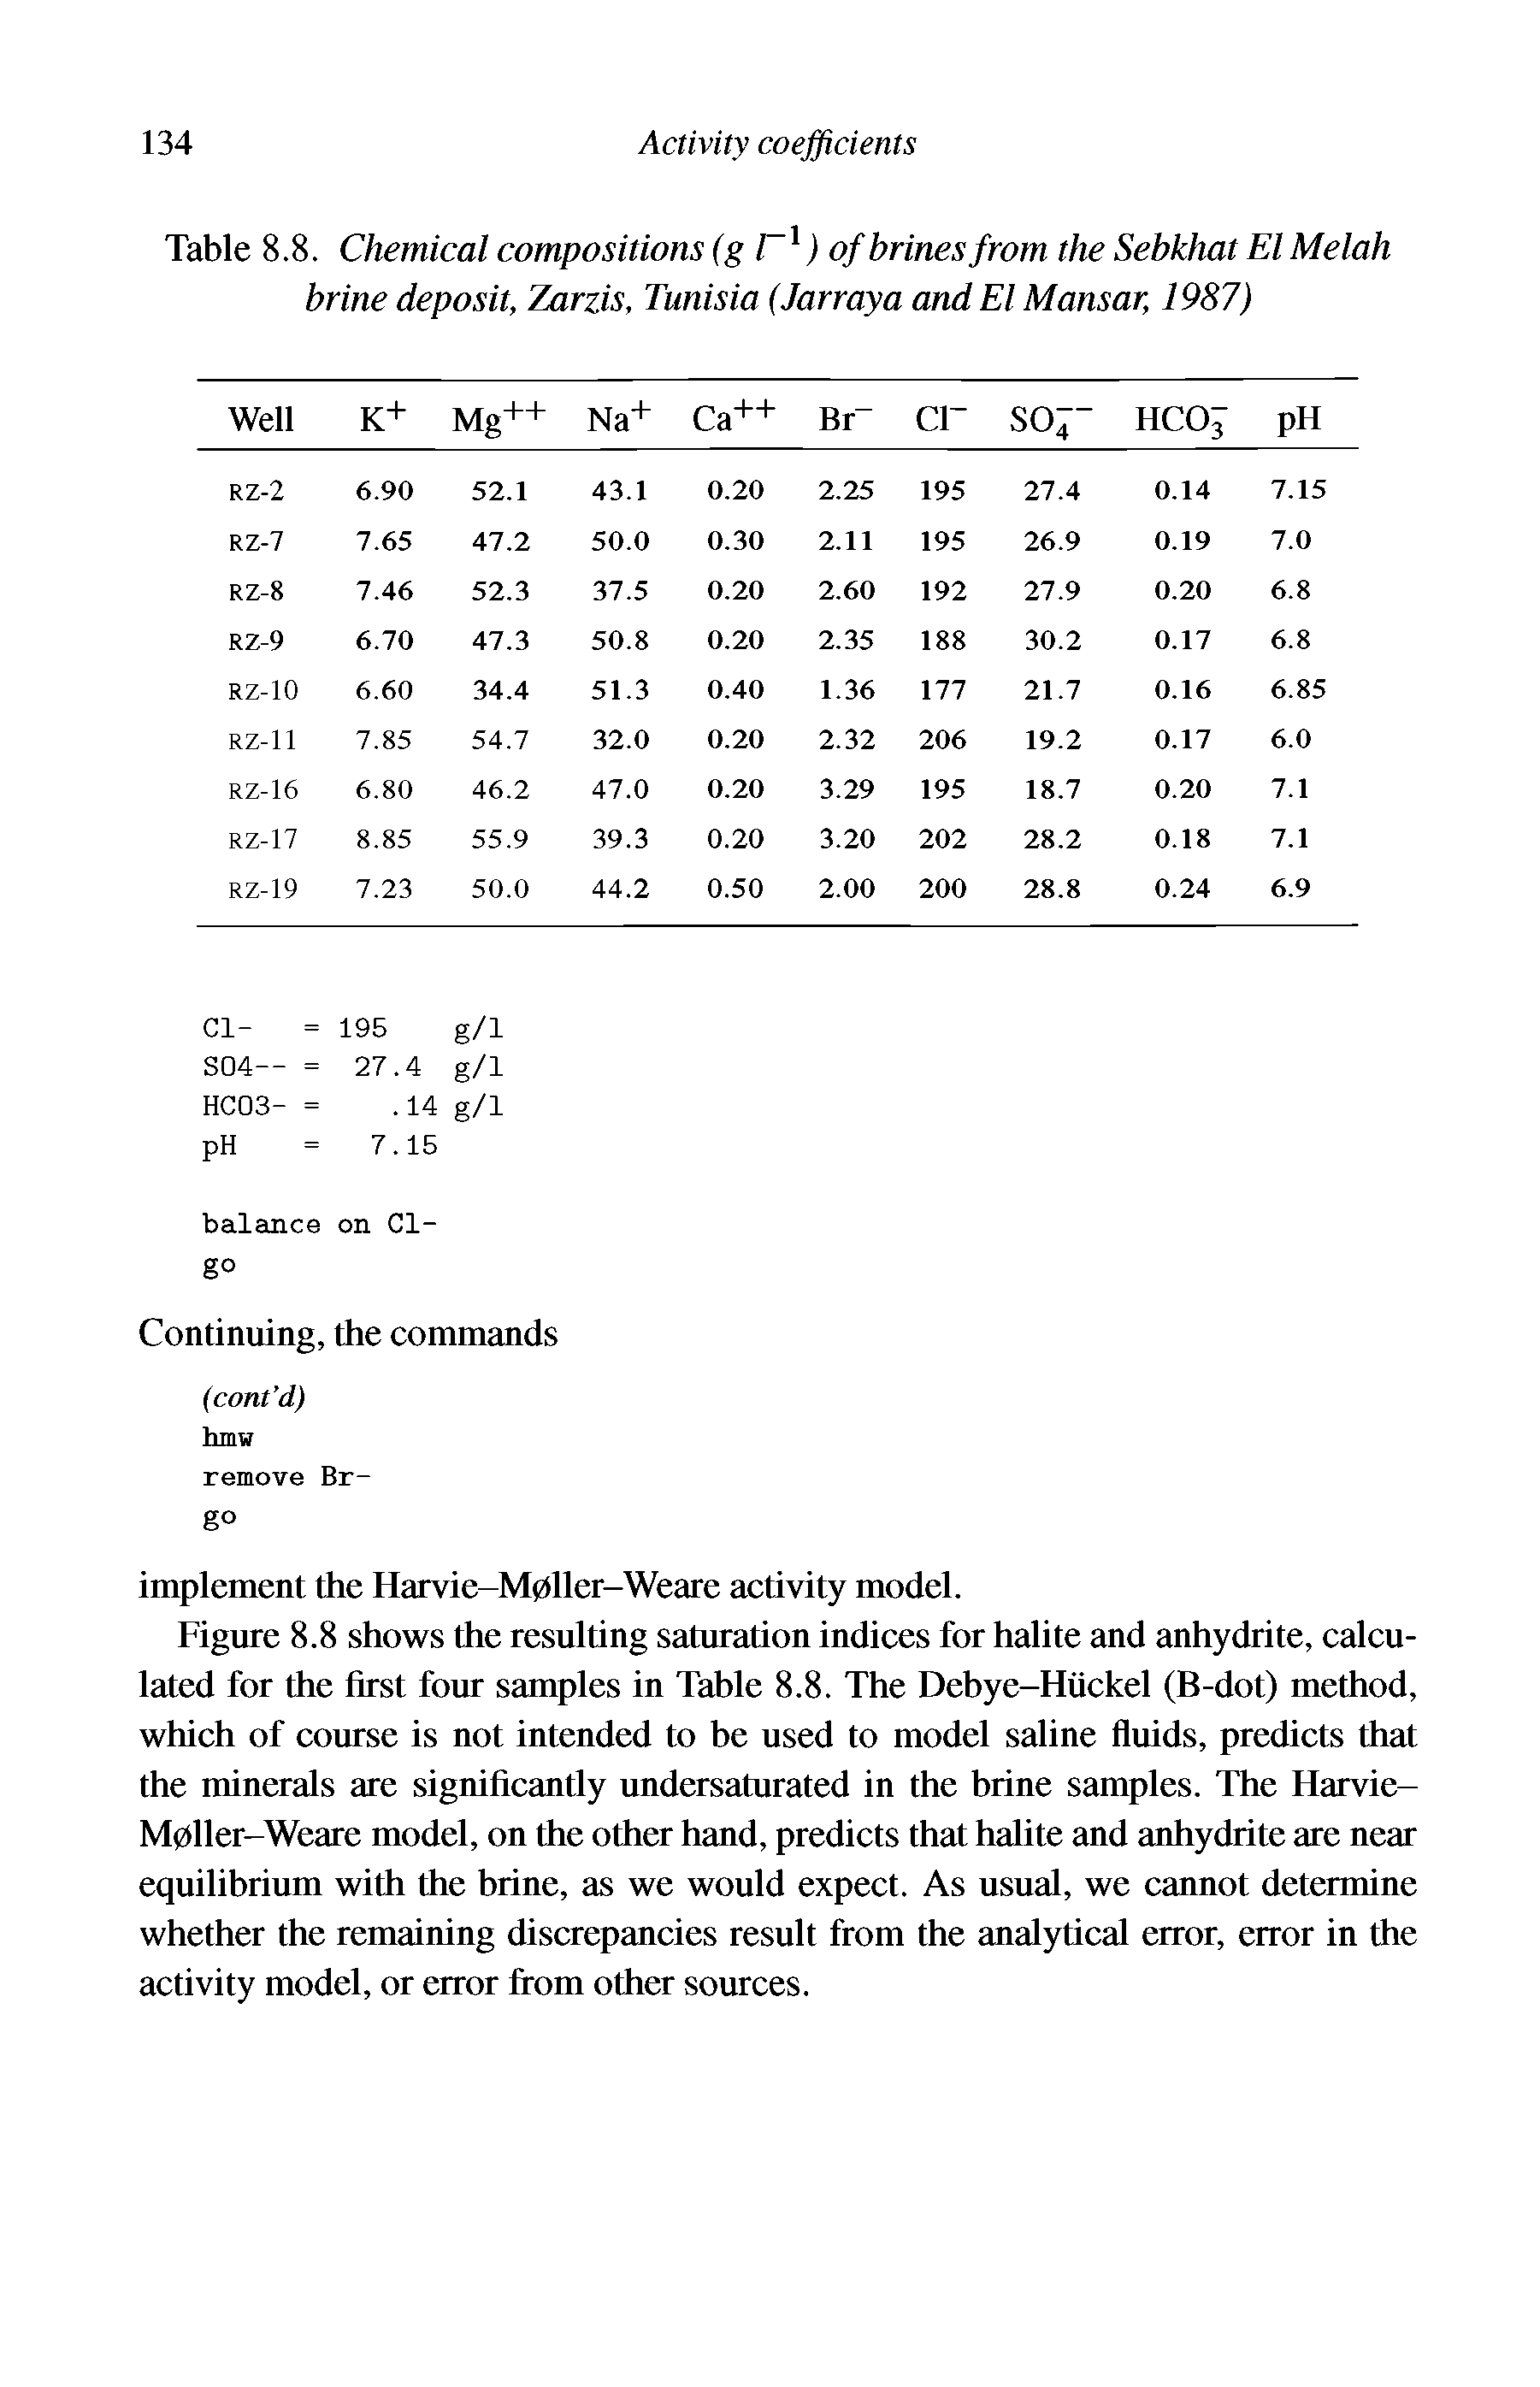 Table 8.8. Chemical compositions (g l x) of brines from the Sebkhat El Melah brine deposit, Zarzis, Tunisia (Jarraya and El Mansar, 1987)...